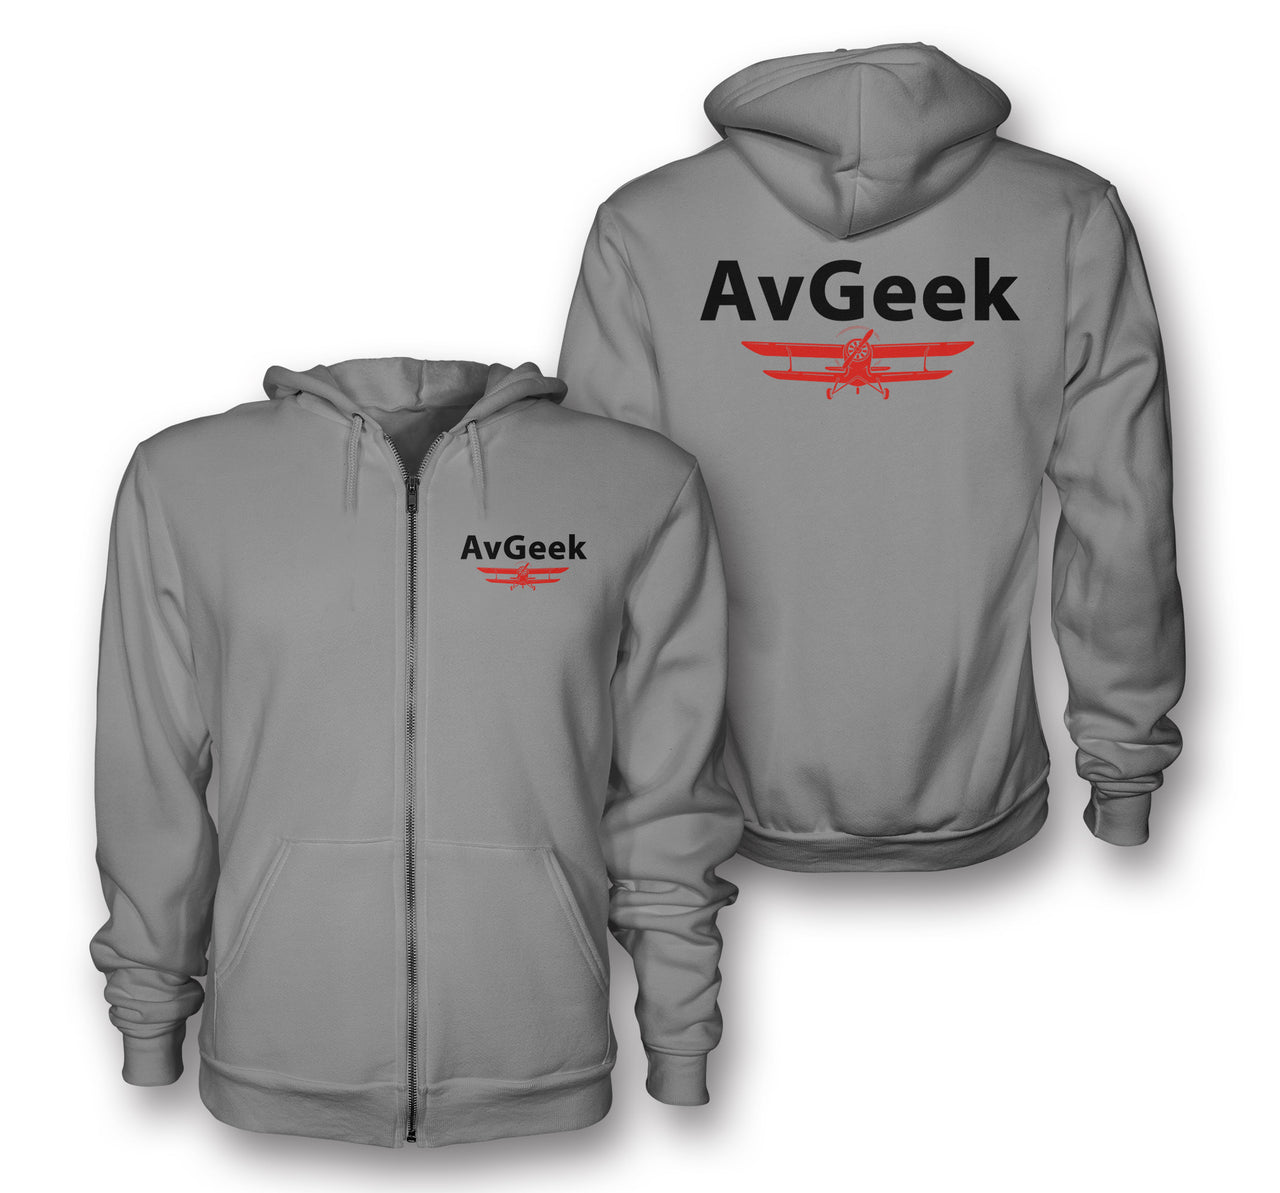 Avgeek Designed Zipped Hoodies